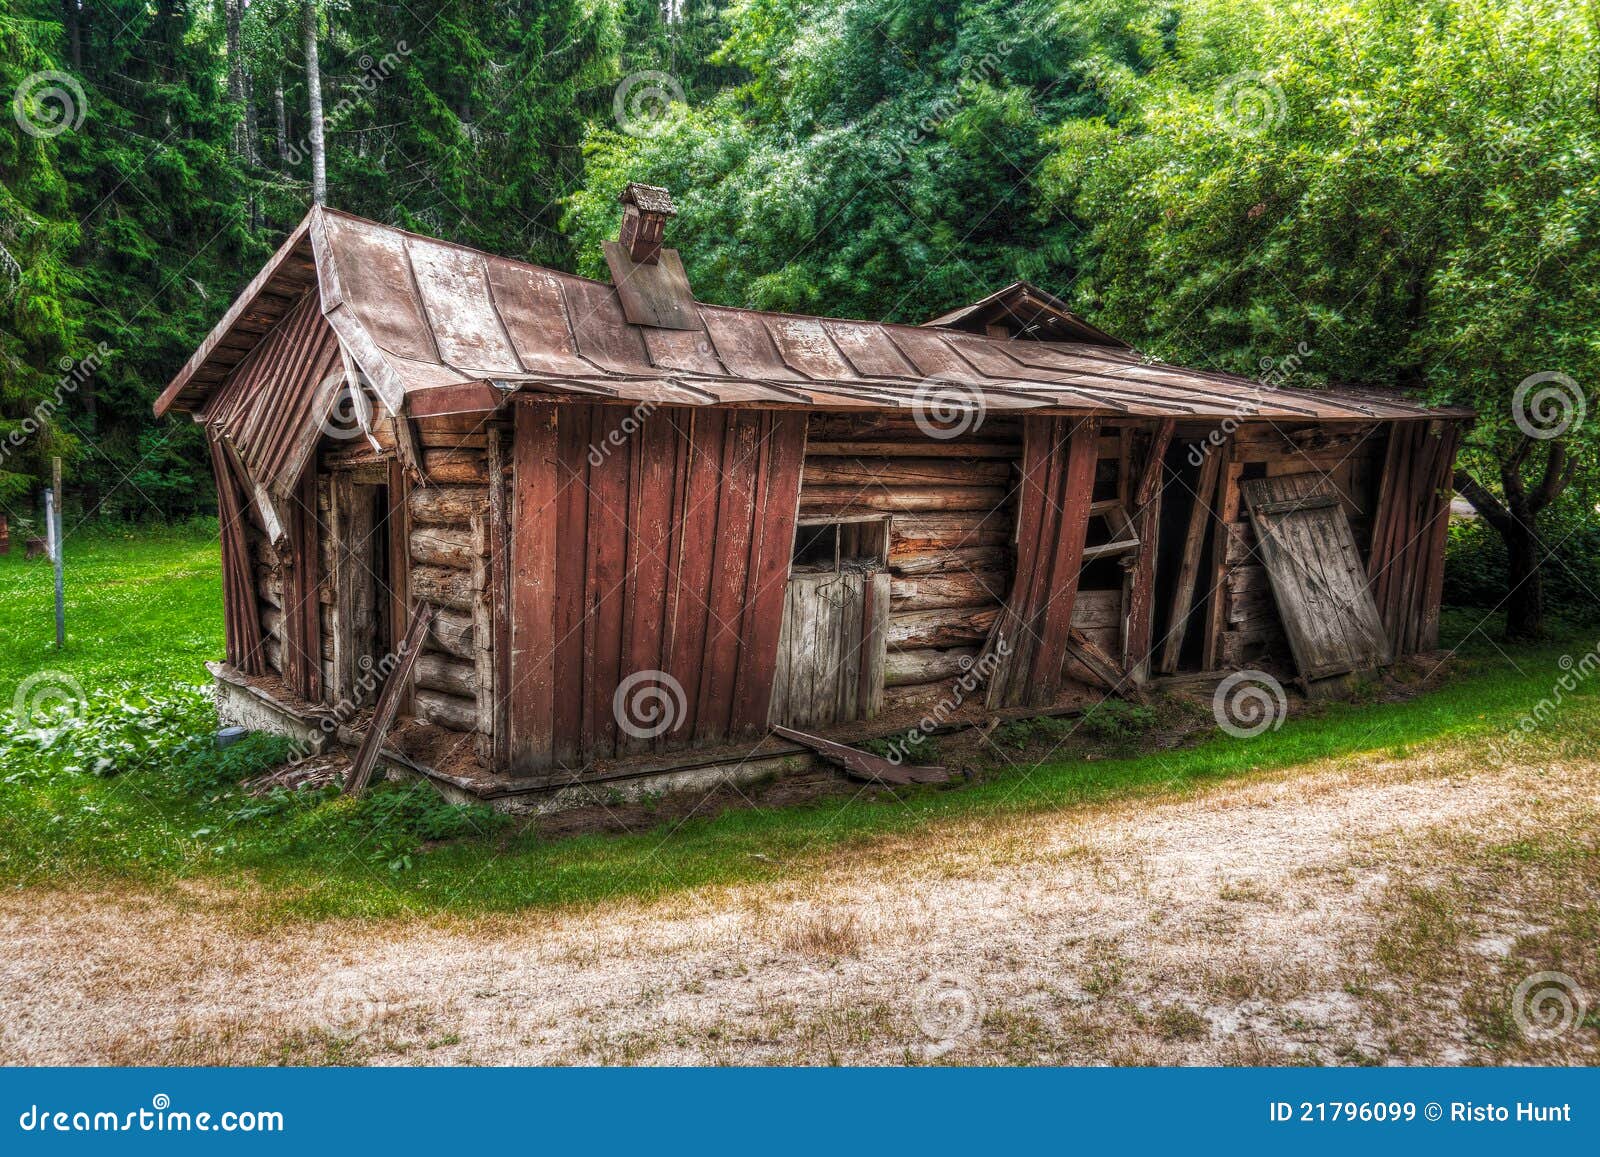 abandon collapsed log cabin